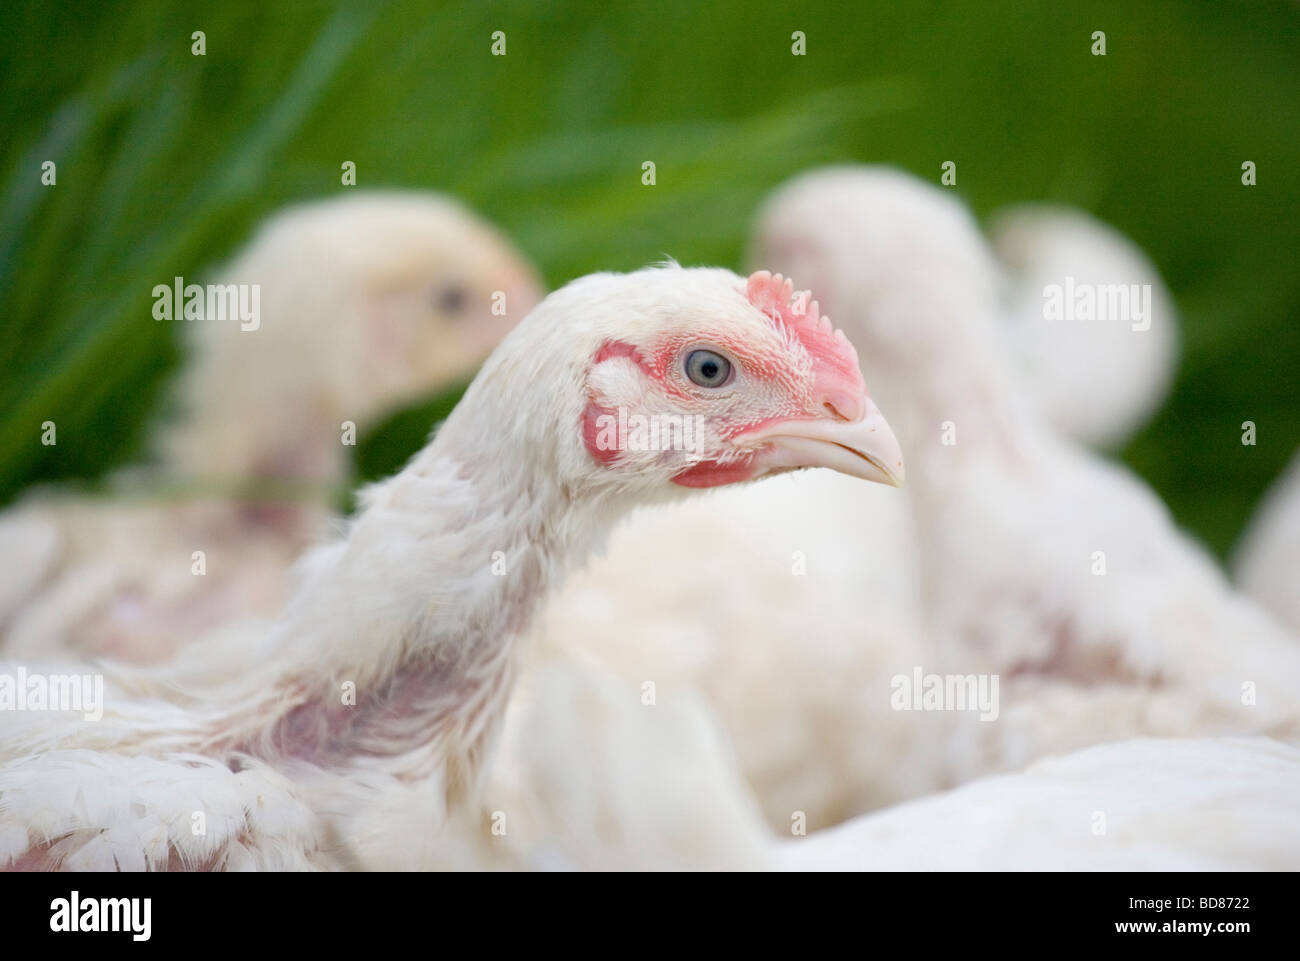 Sasso chickens Stock Photo